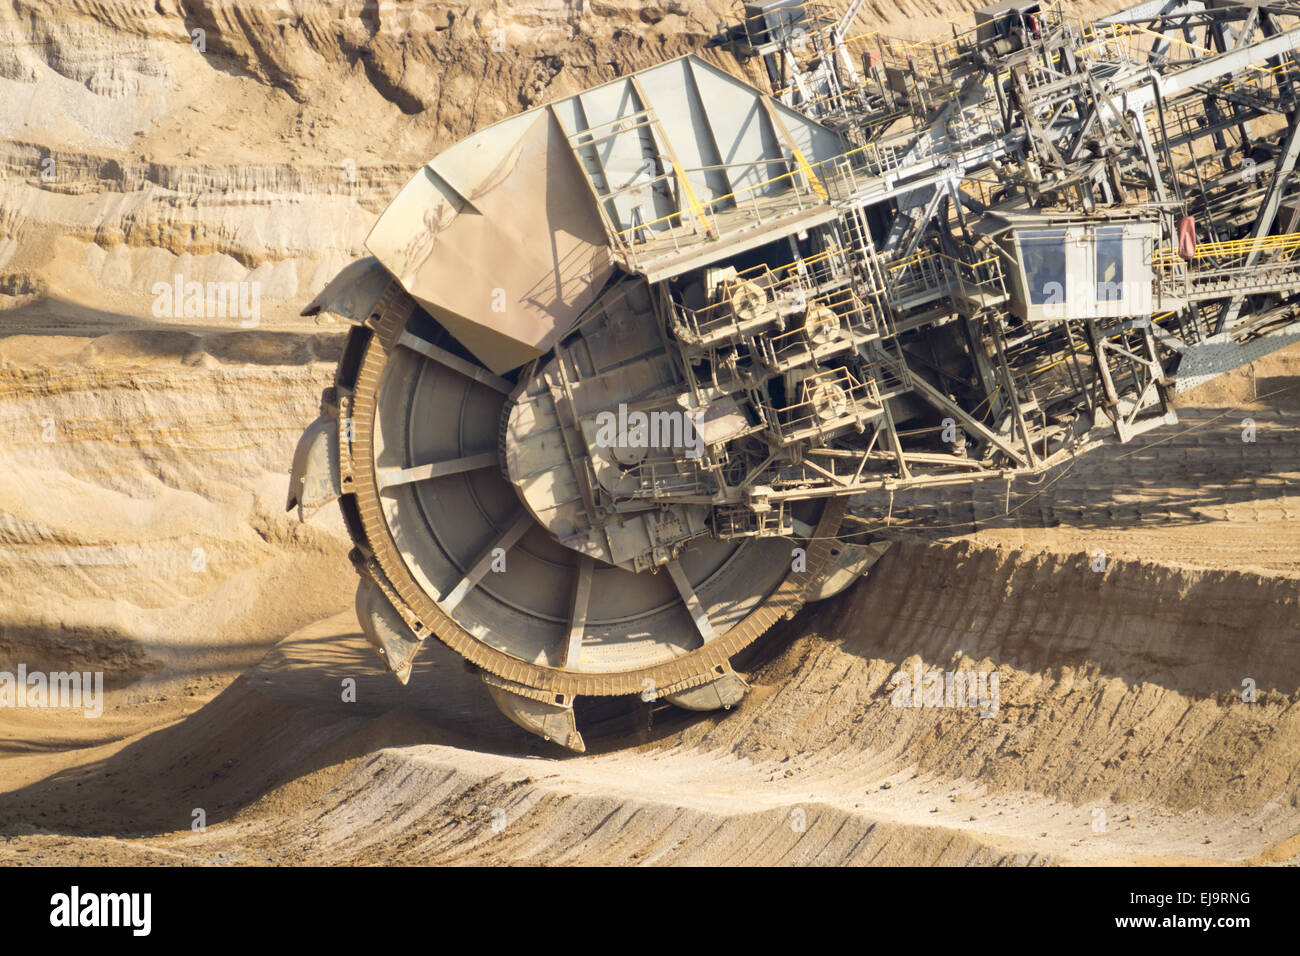 Brown coal mining Hambach, Germany Stock Photo